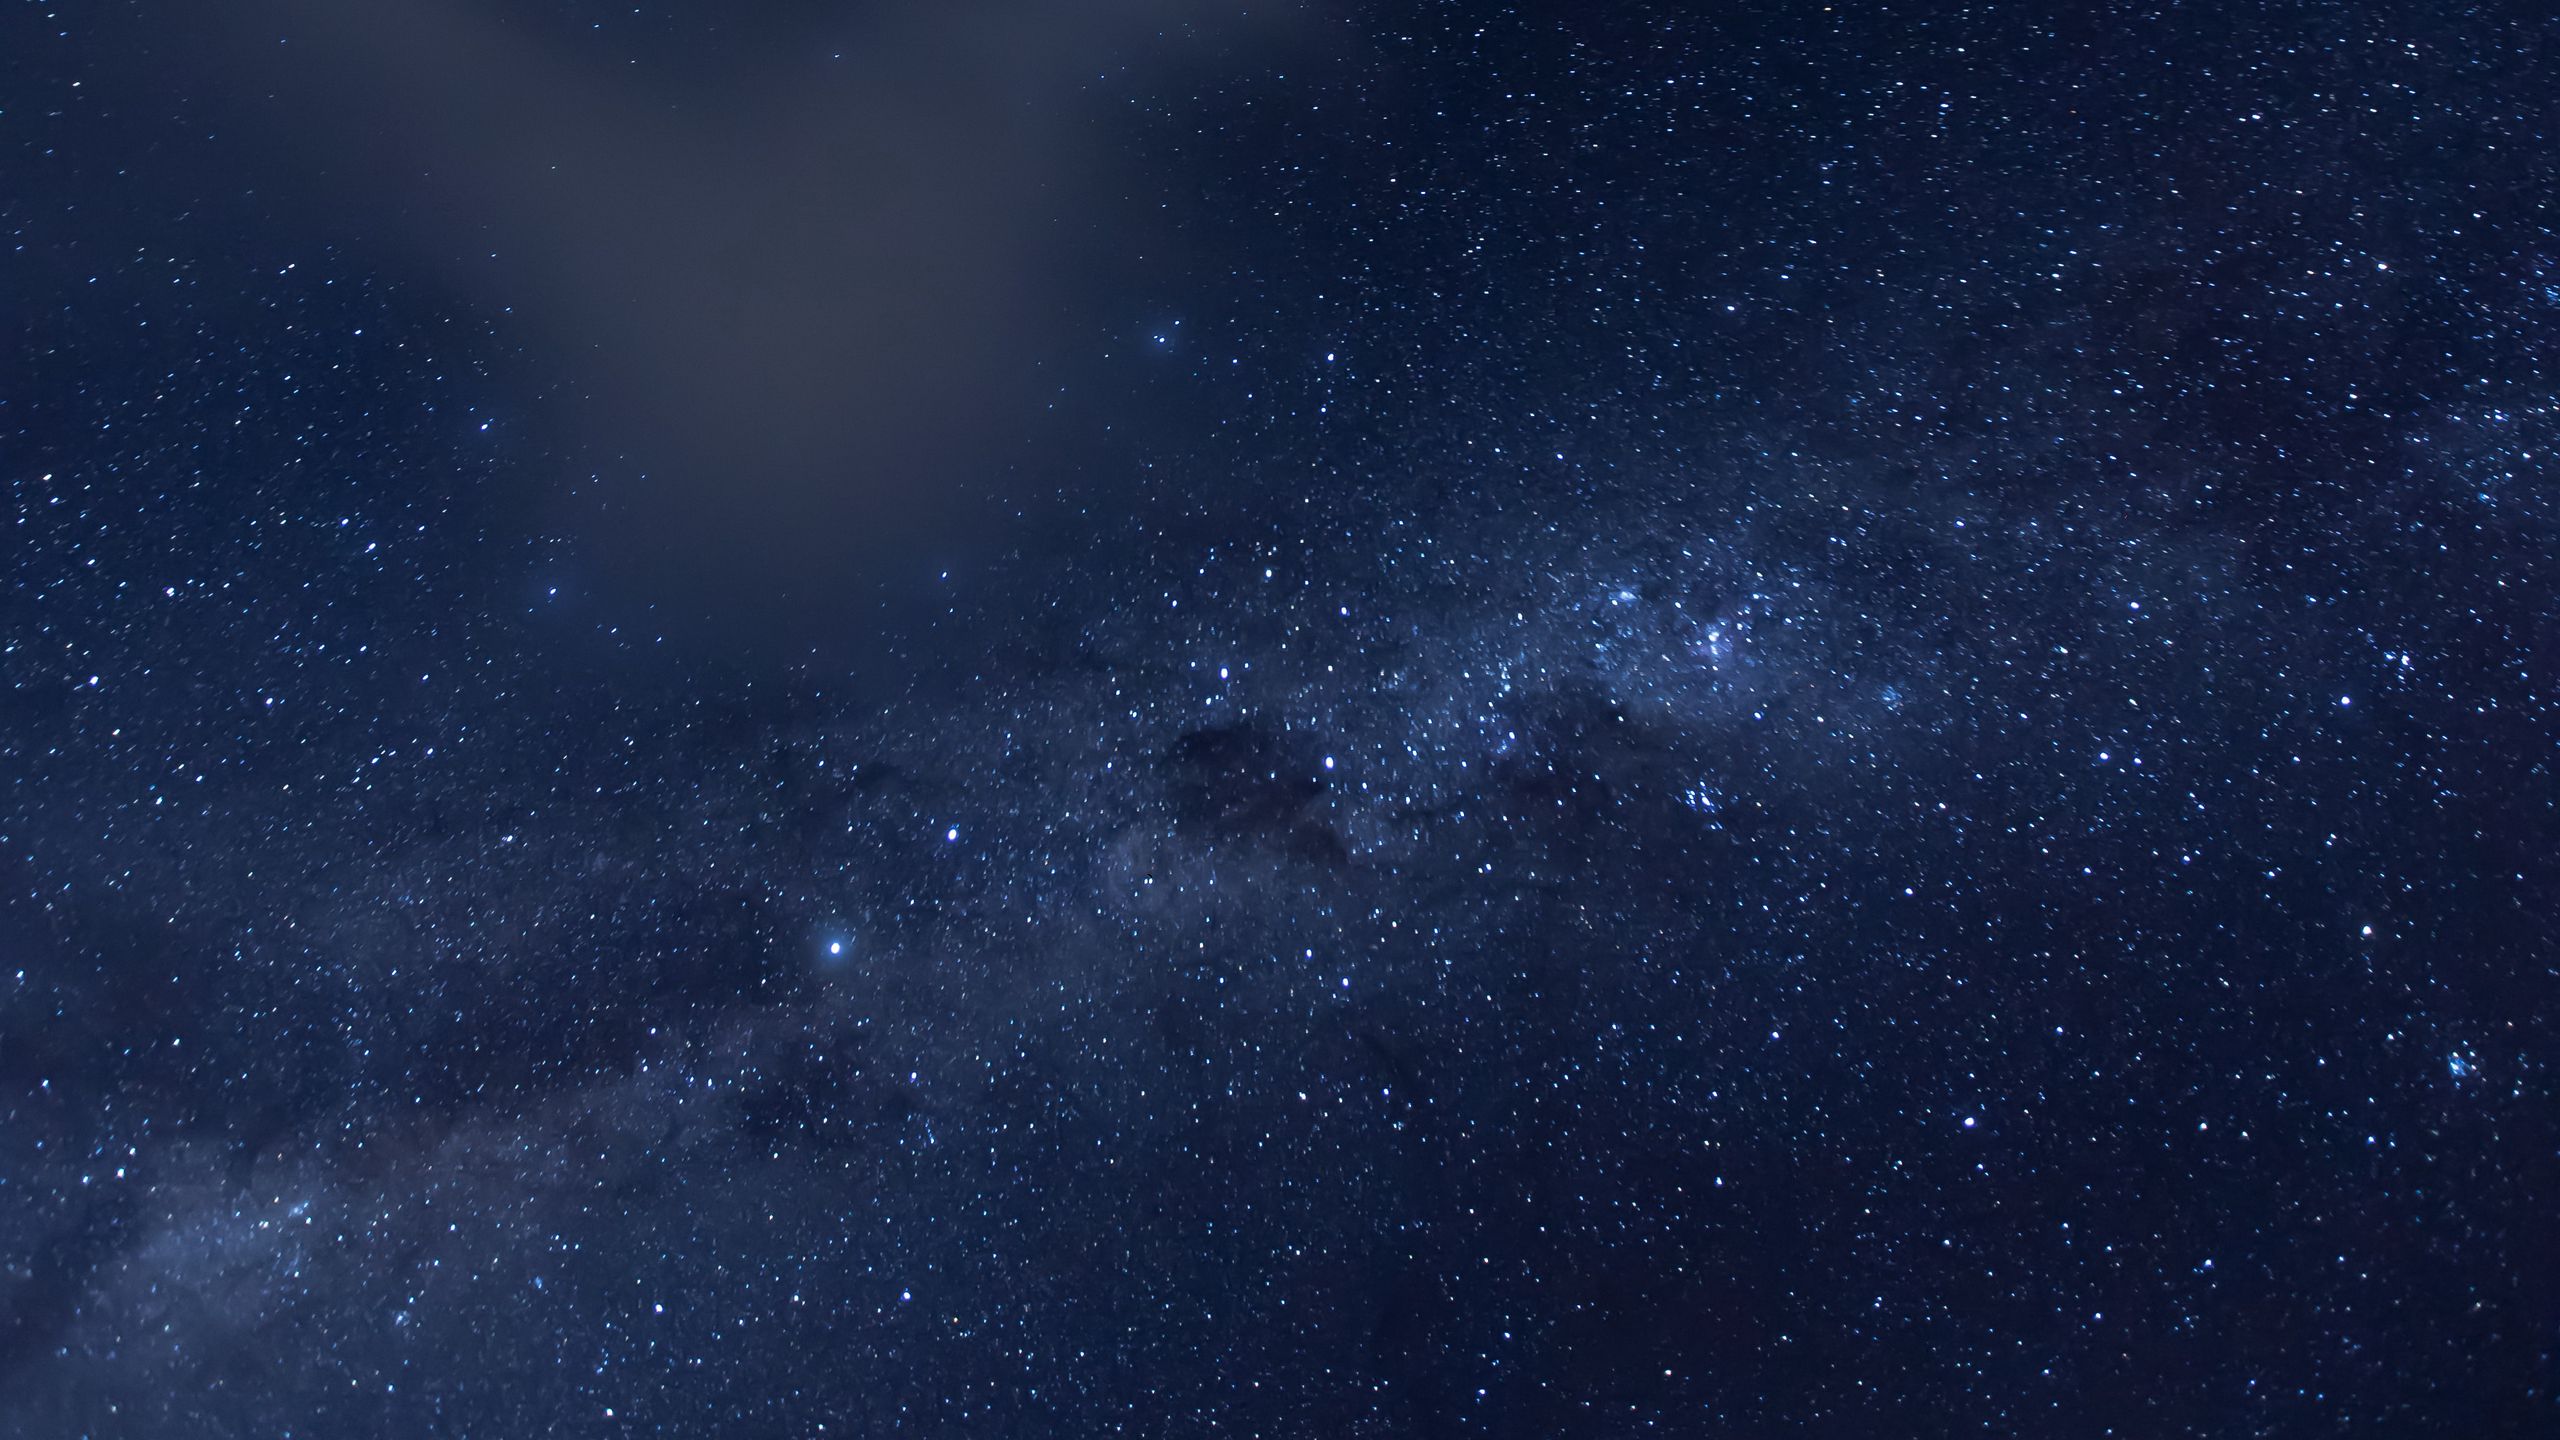 Download Wallpaper 2560x1440 Stars Starry Sky Nebula Galaxy Space Widescreen 16 9 Hd Background